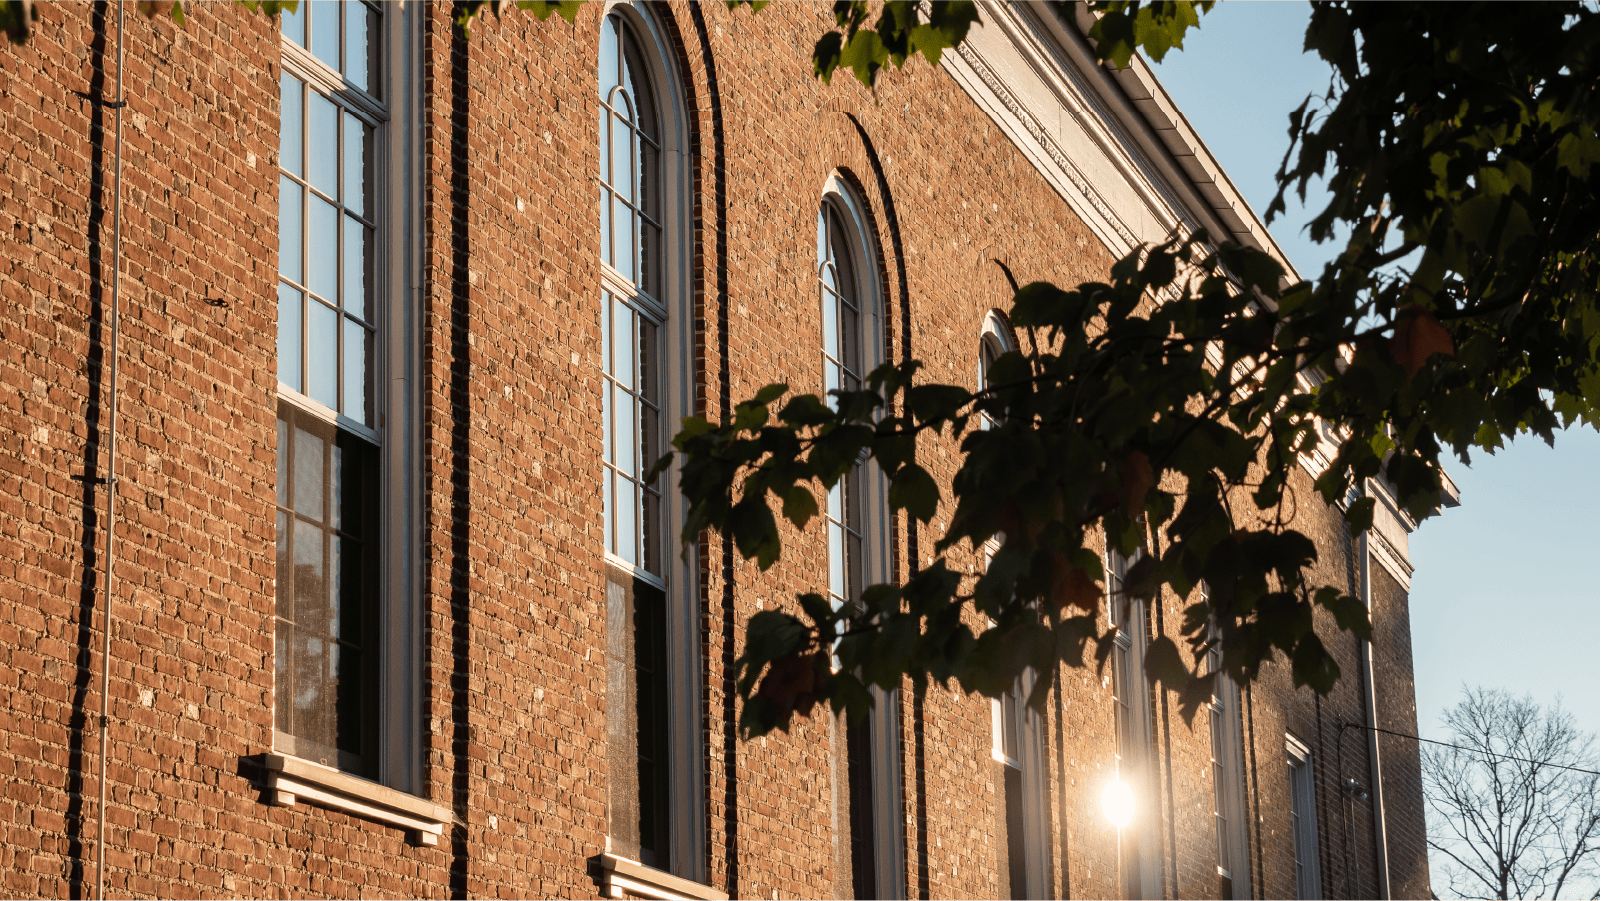 Sun glistening off ornate windows